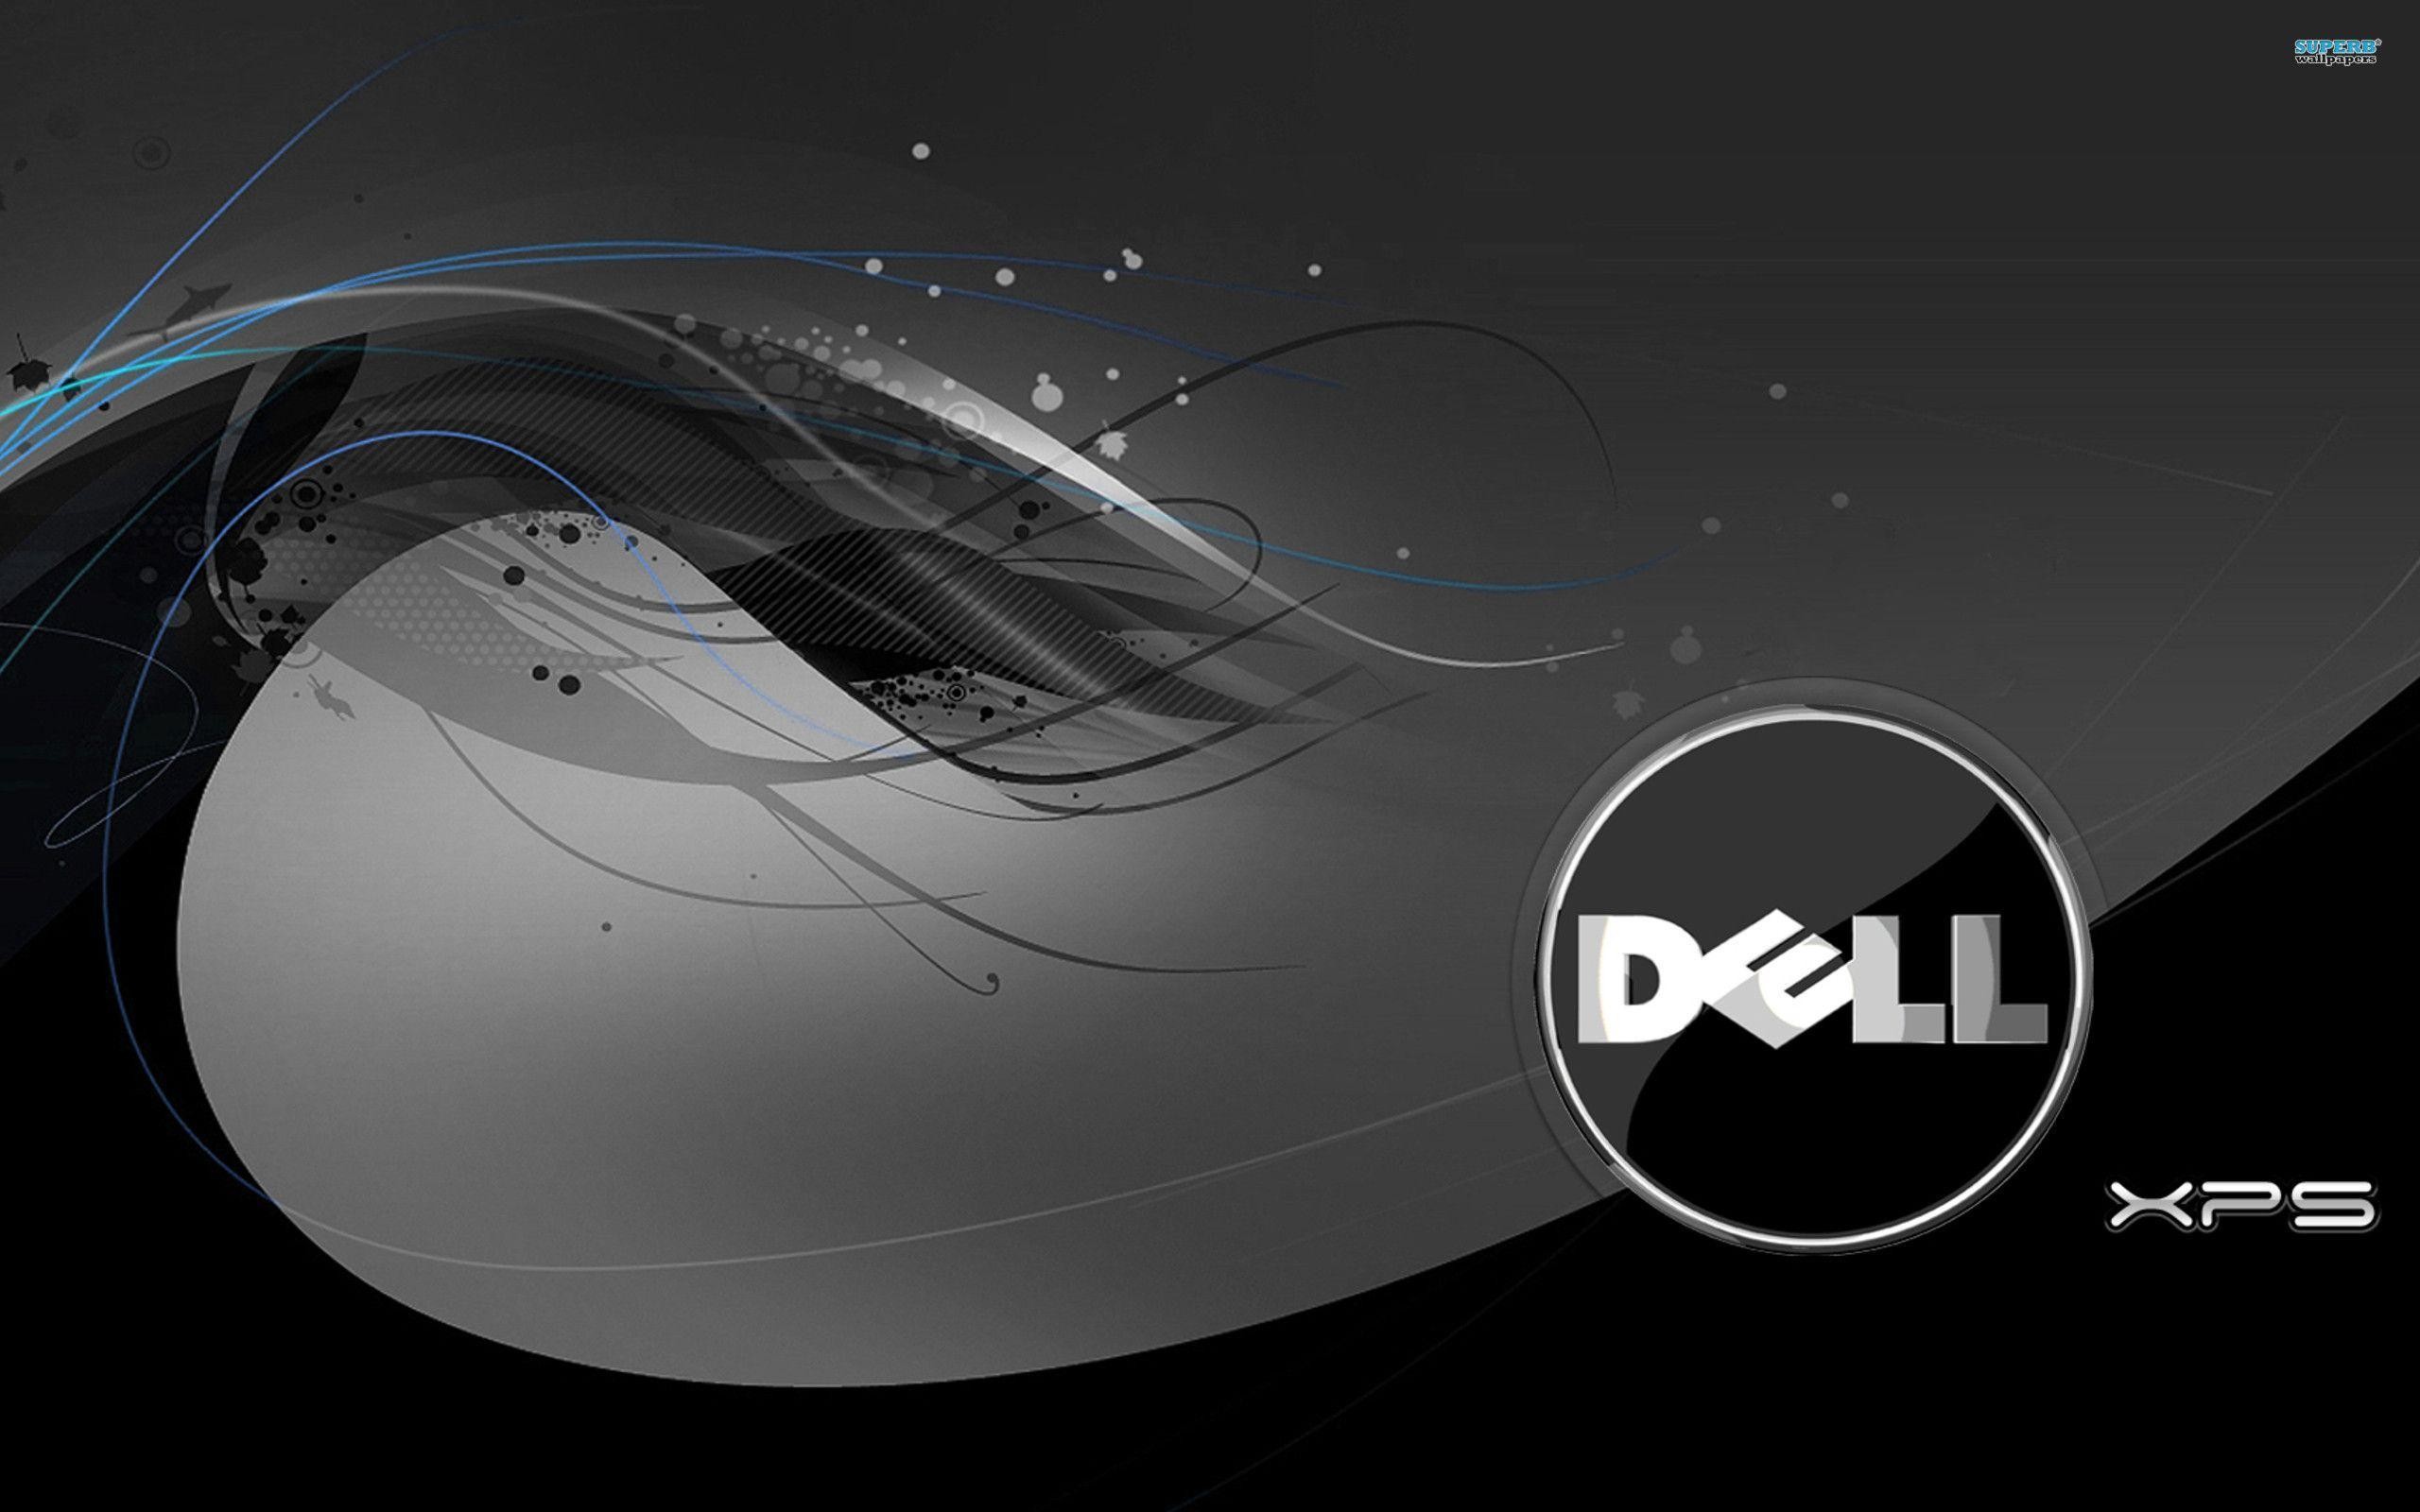 2560x1600 Dell Wallpapers - Full HD wallpaper search